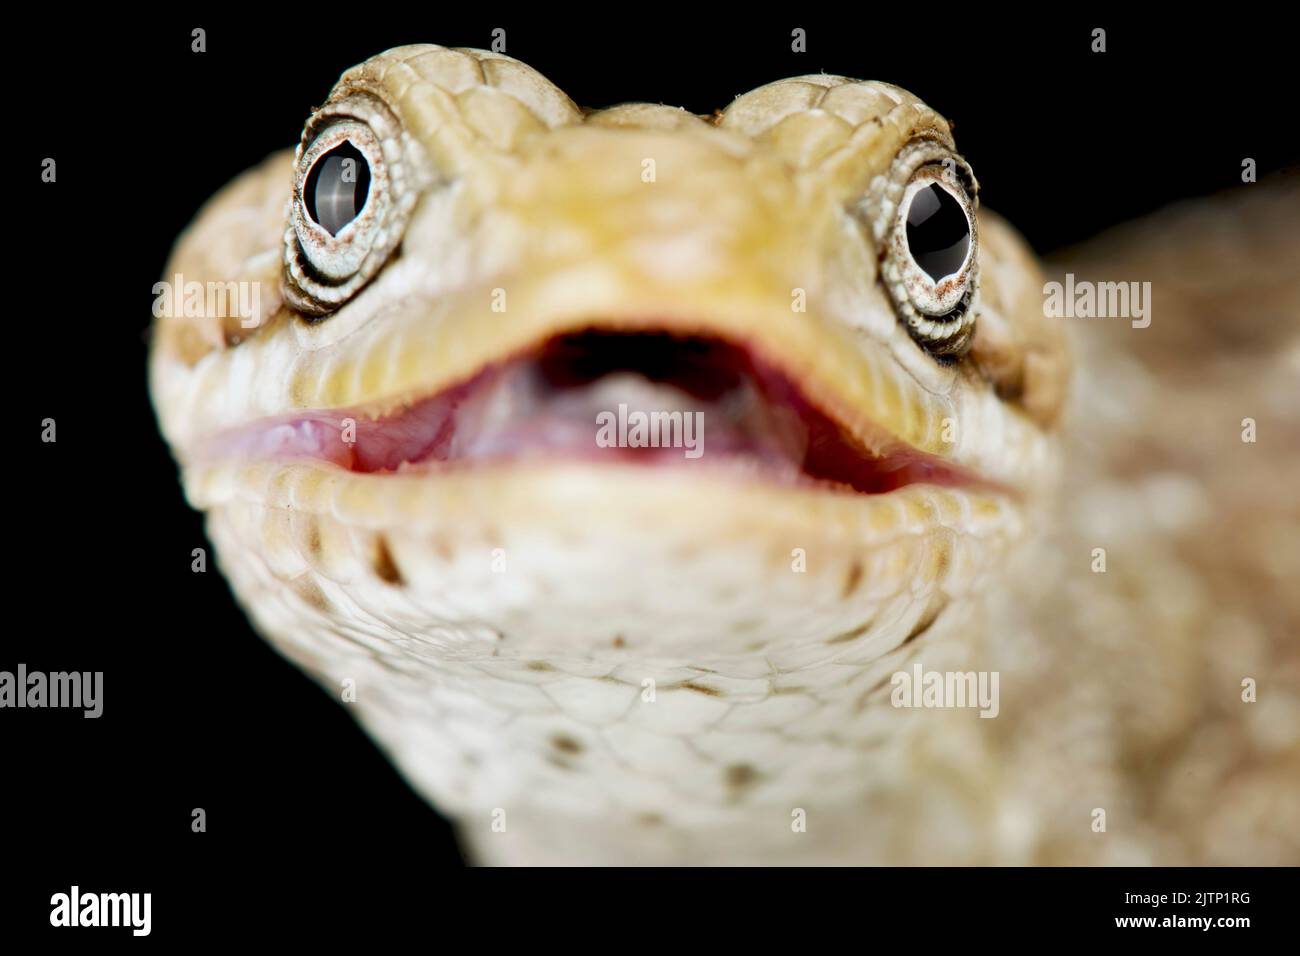 Texas alligator lizard (Gerrhonotus infernalis) Stock Photo